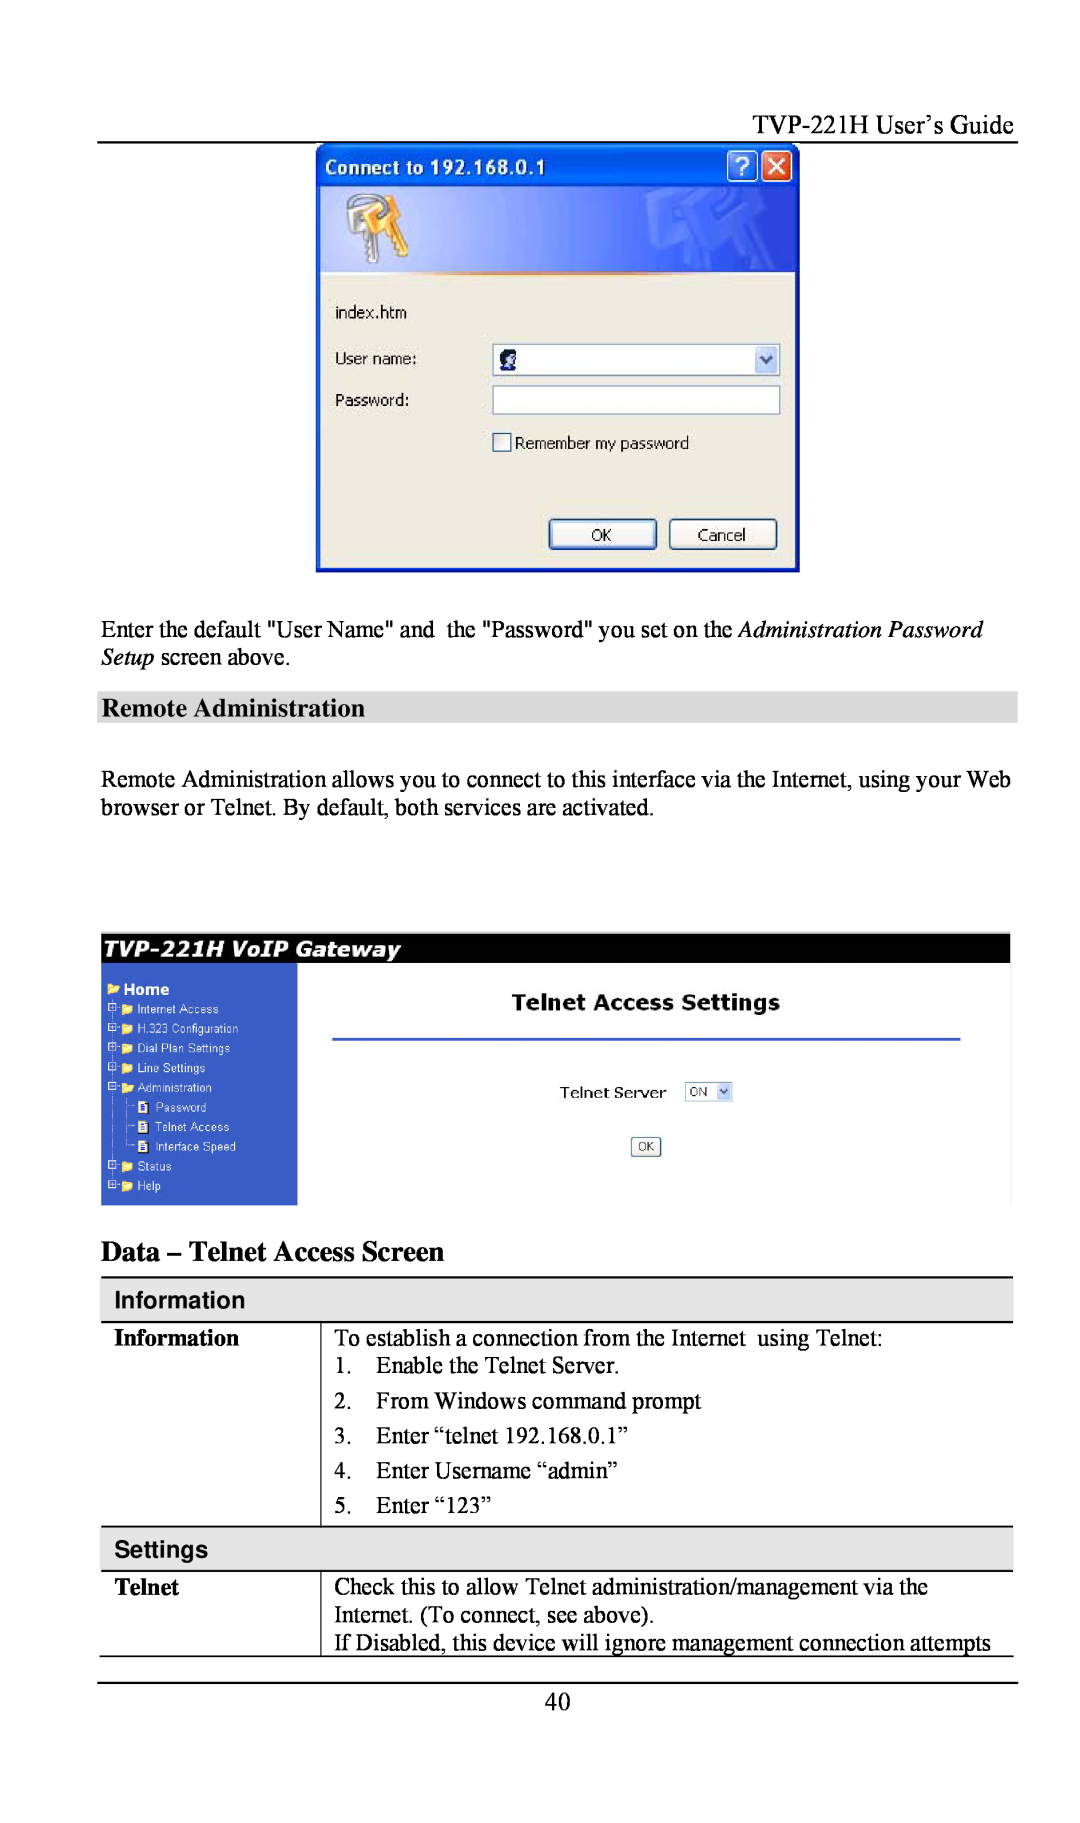 TRENDnet TVP- 221H, VoIP Gateway manual Data - Telnet Access Screen, Remote Administration, Information, Settings 